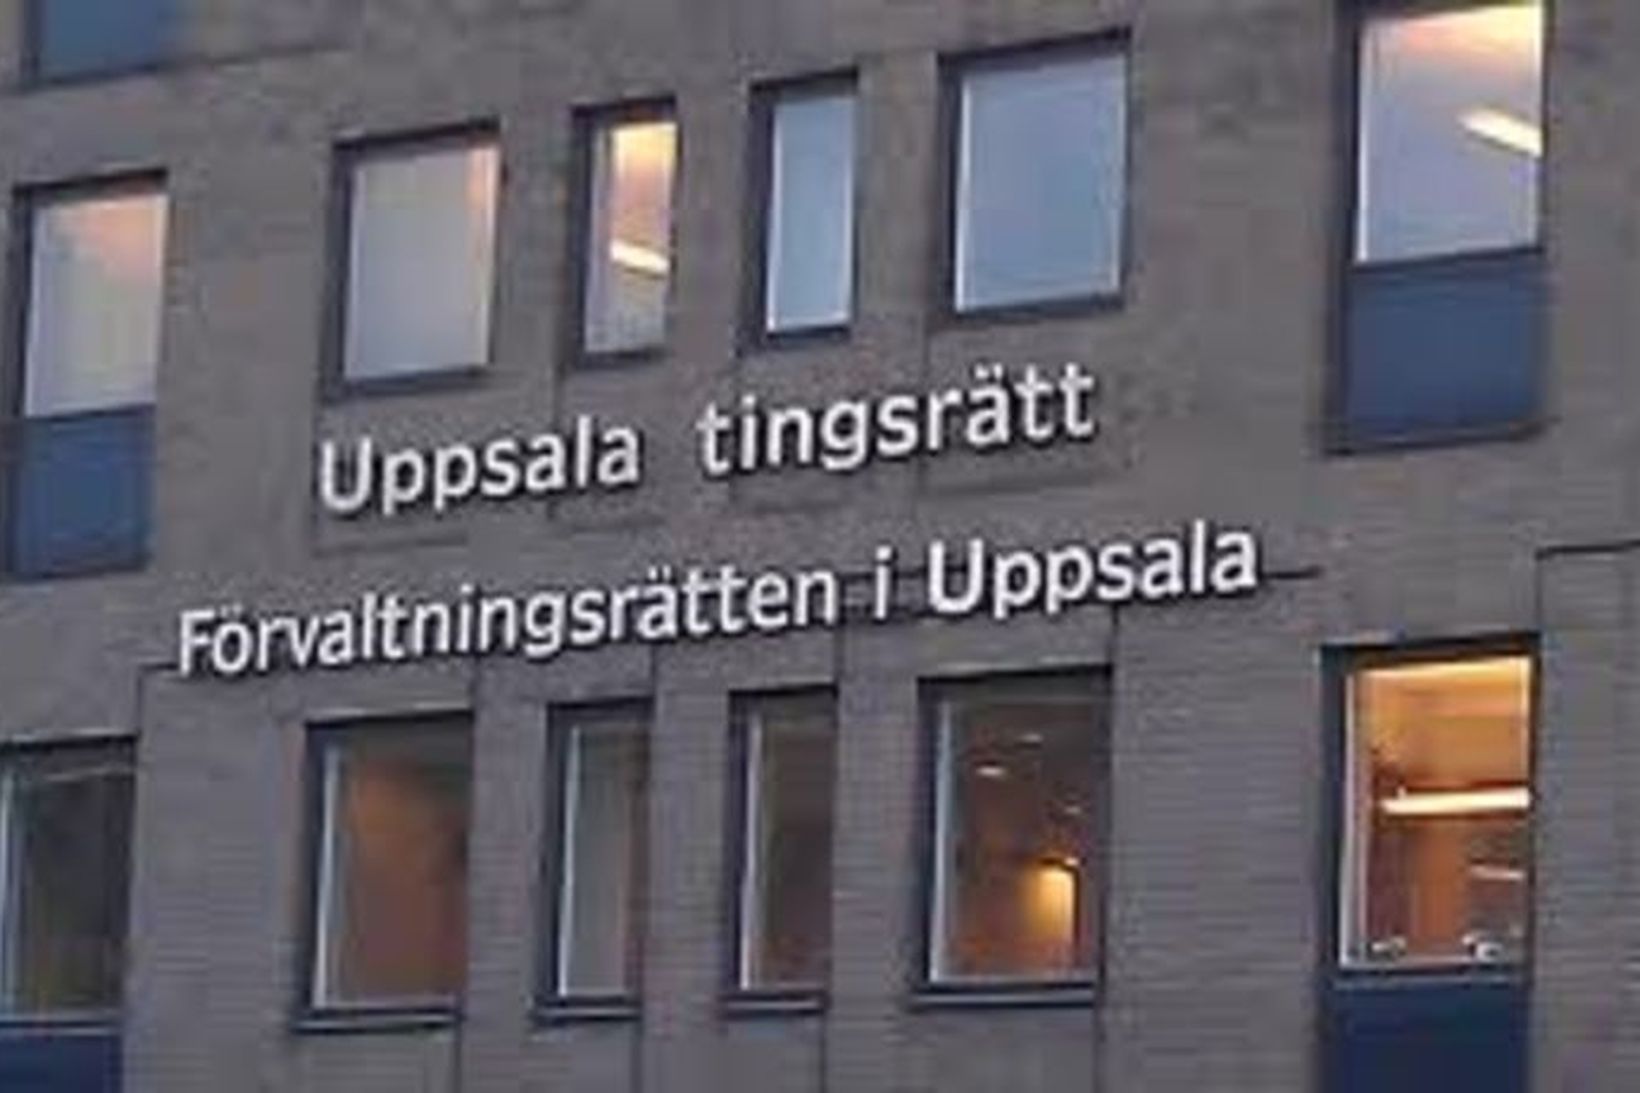 Uppsala tingsrätt/Héraðsdómur Uppsala